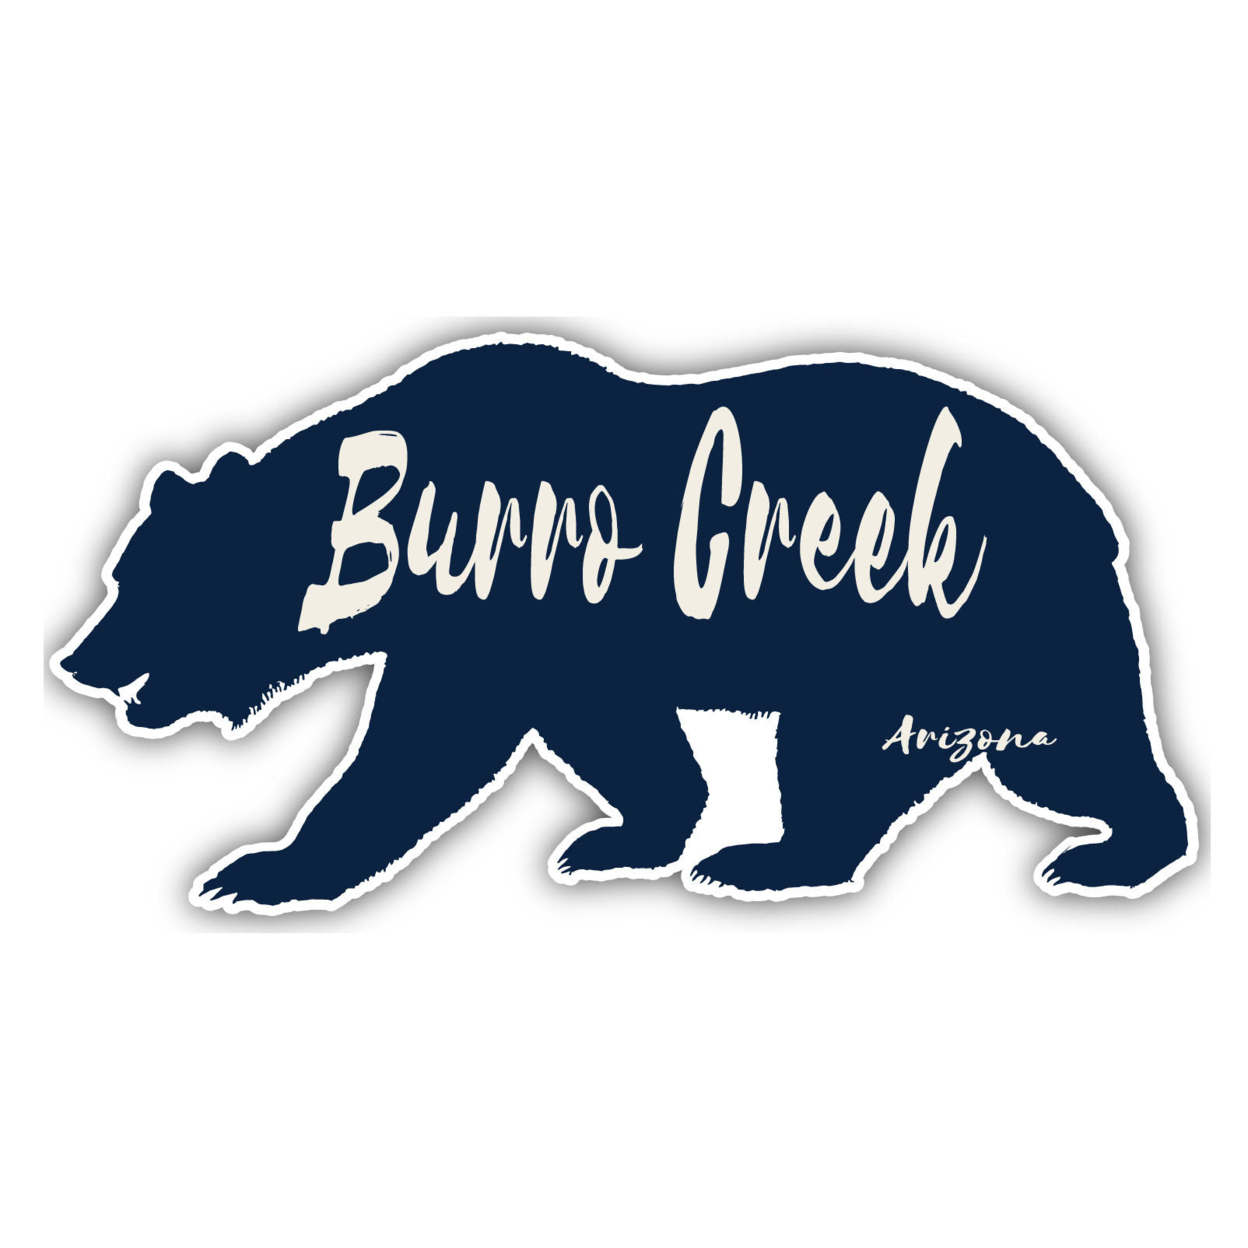 Burro Creek Arizona Souvenir Decorative Stickers (Choose Theme And Size) - 4-Pack, 4-Inch, Bear